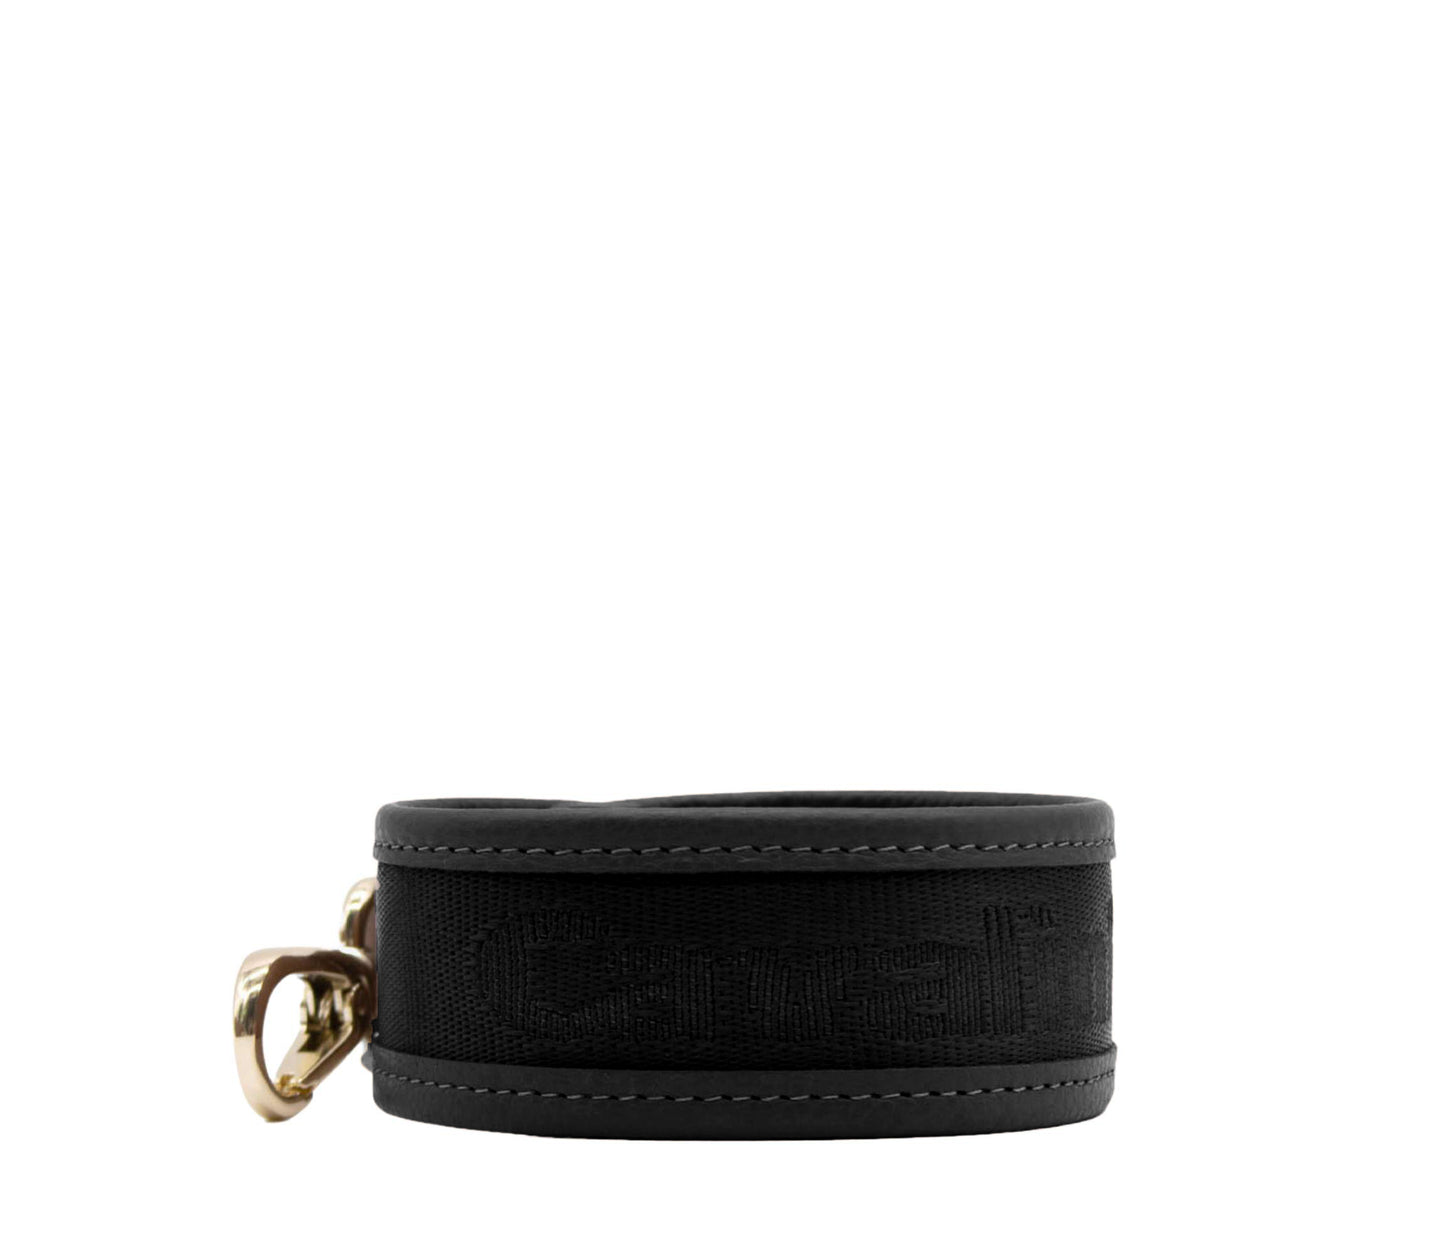 #color_ Black | Cavalinho Muse 3 in 1: Leather Clutch, Handbag or Crossbody Bag - Black - 18300509.01.99_4